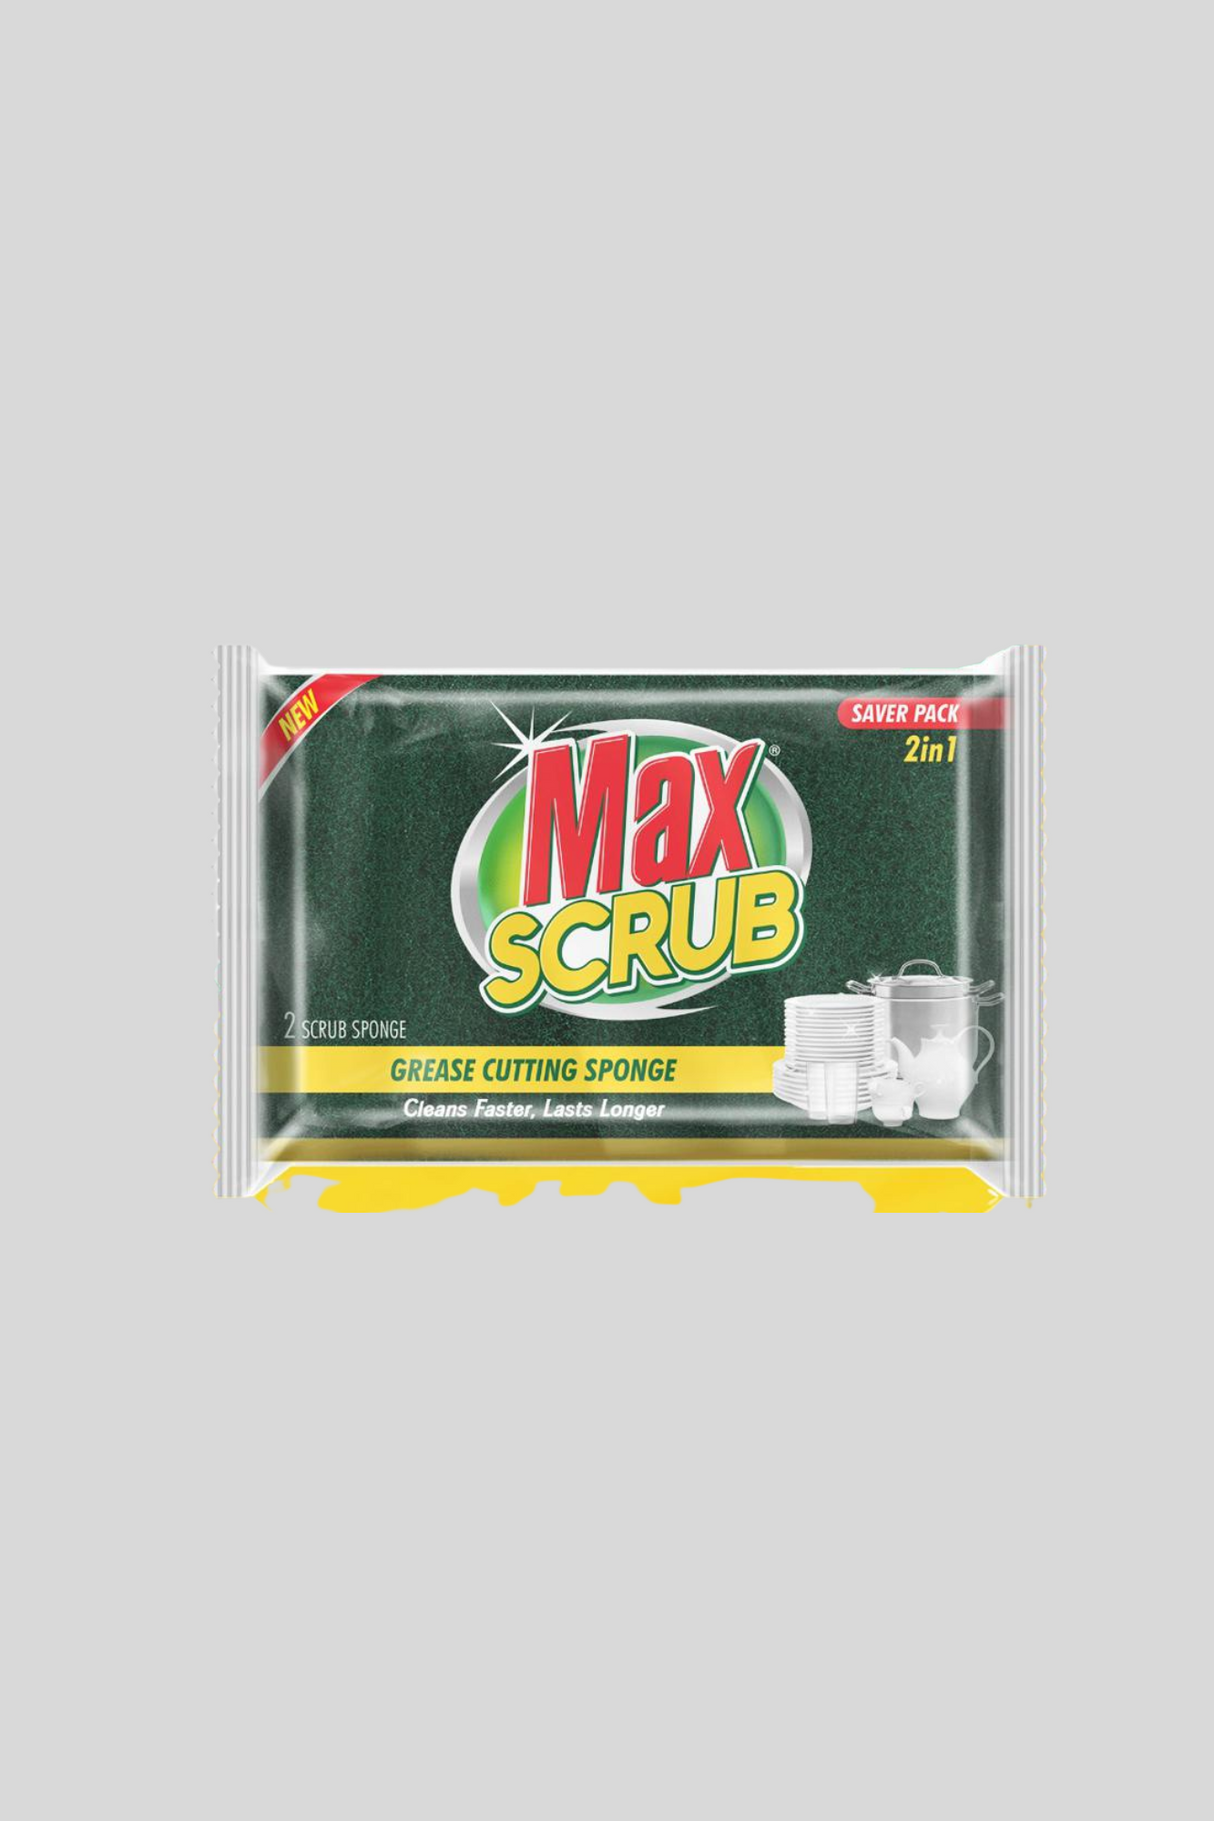 max scrub sponge grease cutting 2in1